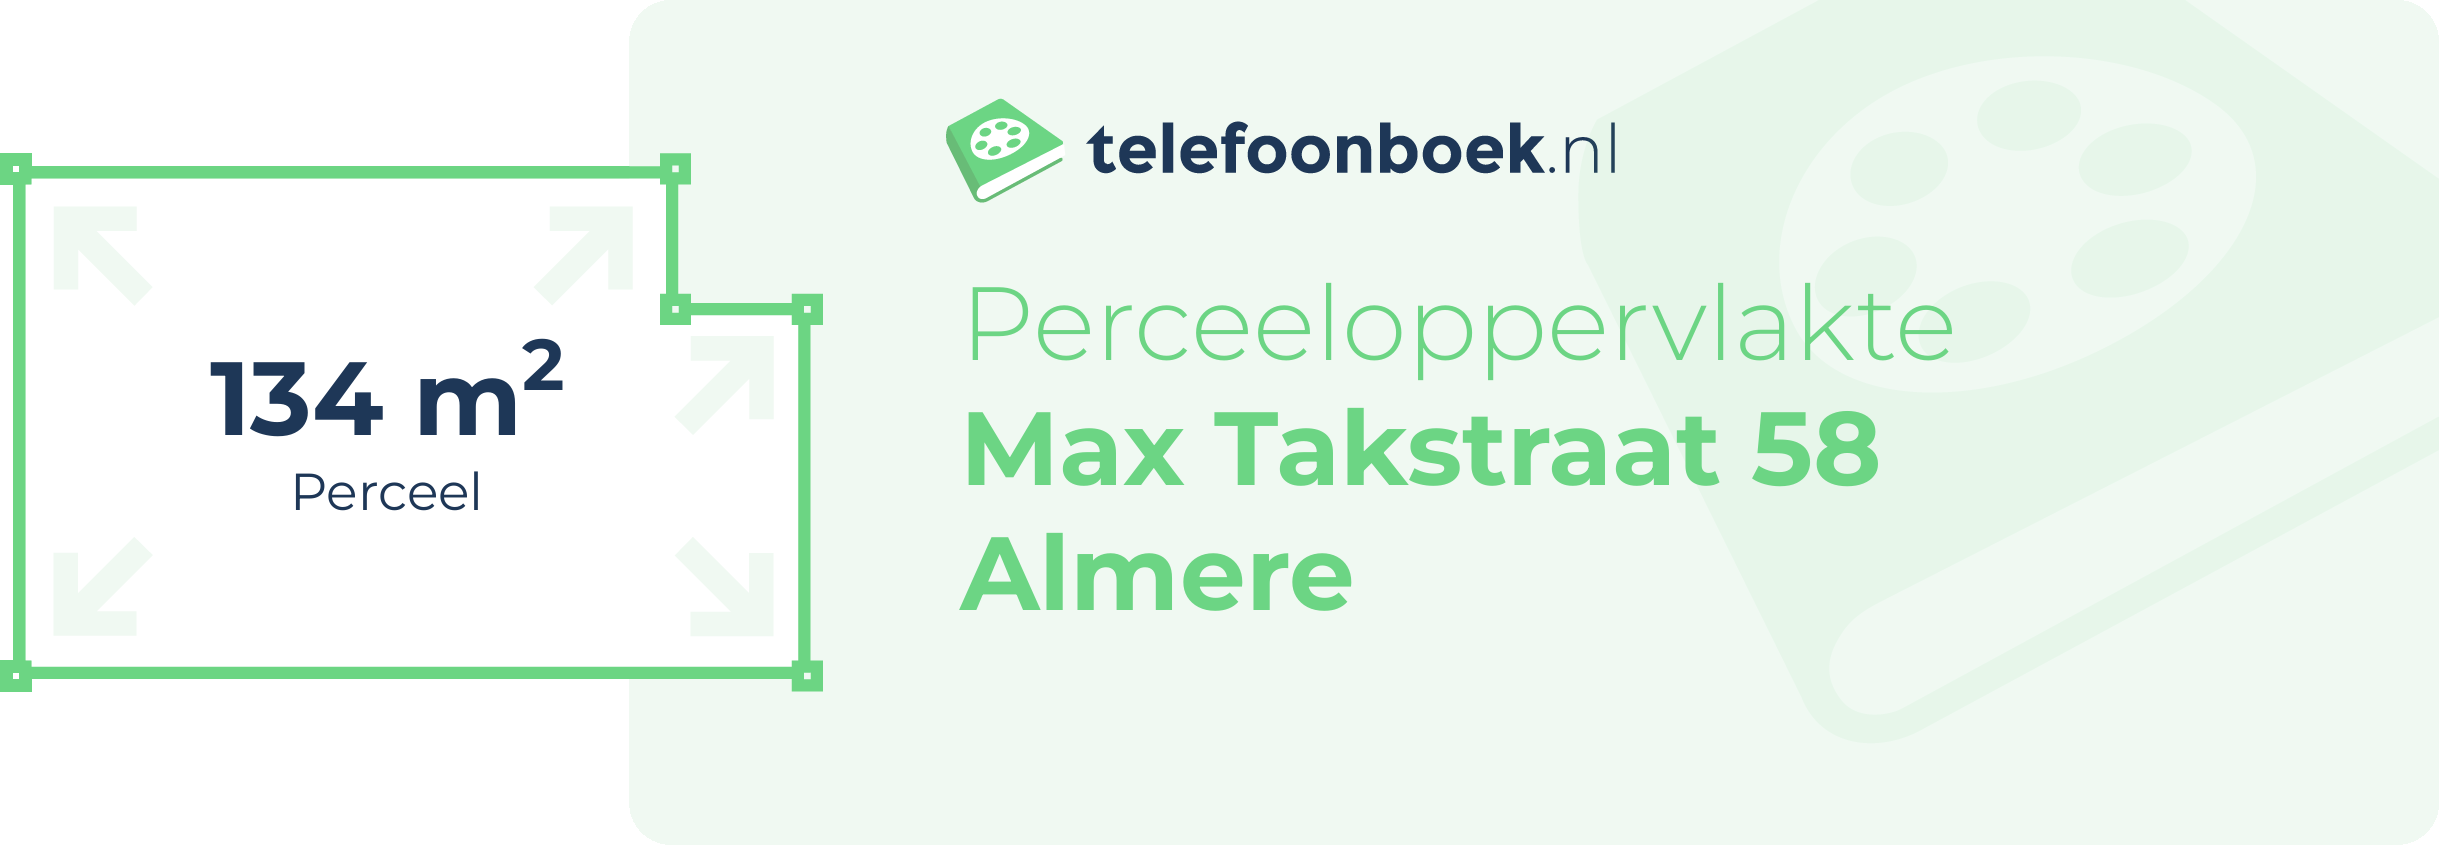 Perceeloppervlakte Max Takstraat 58 Almere